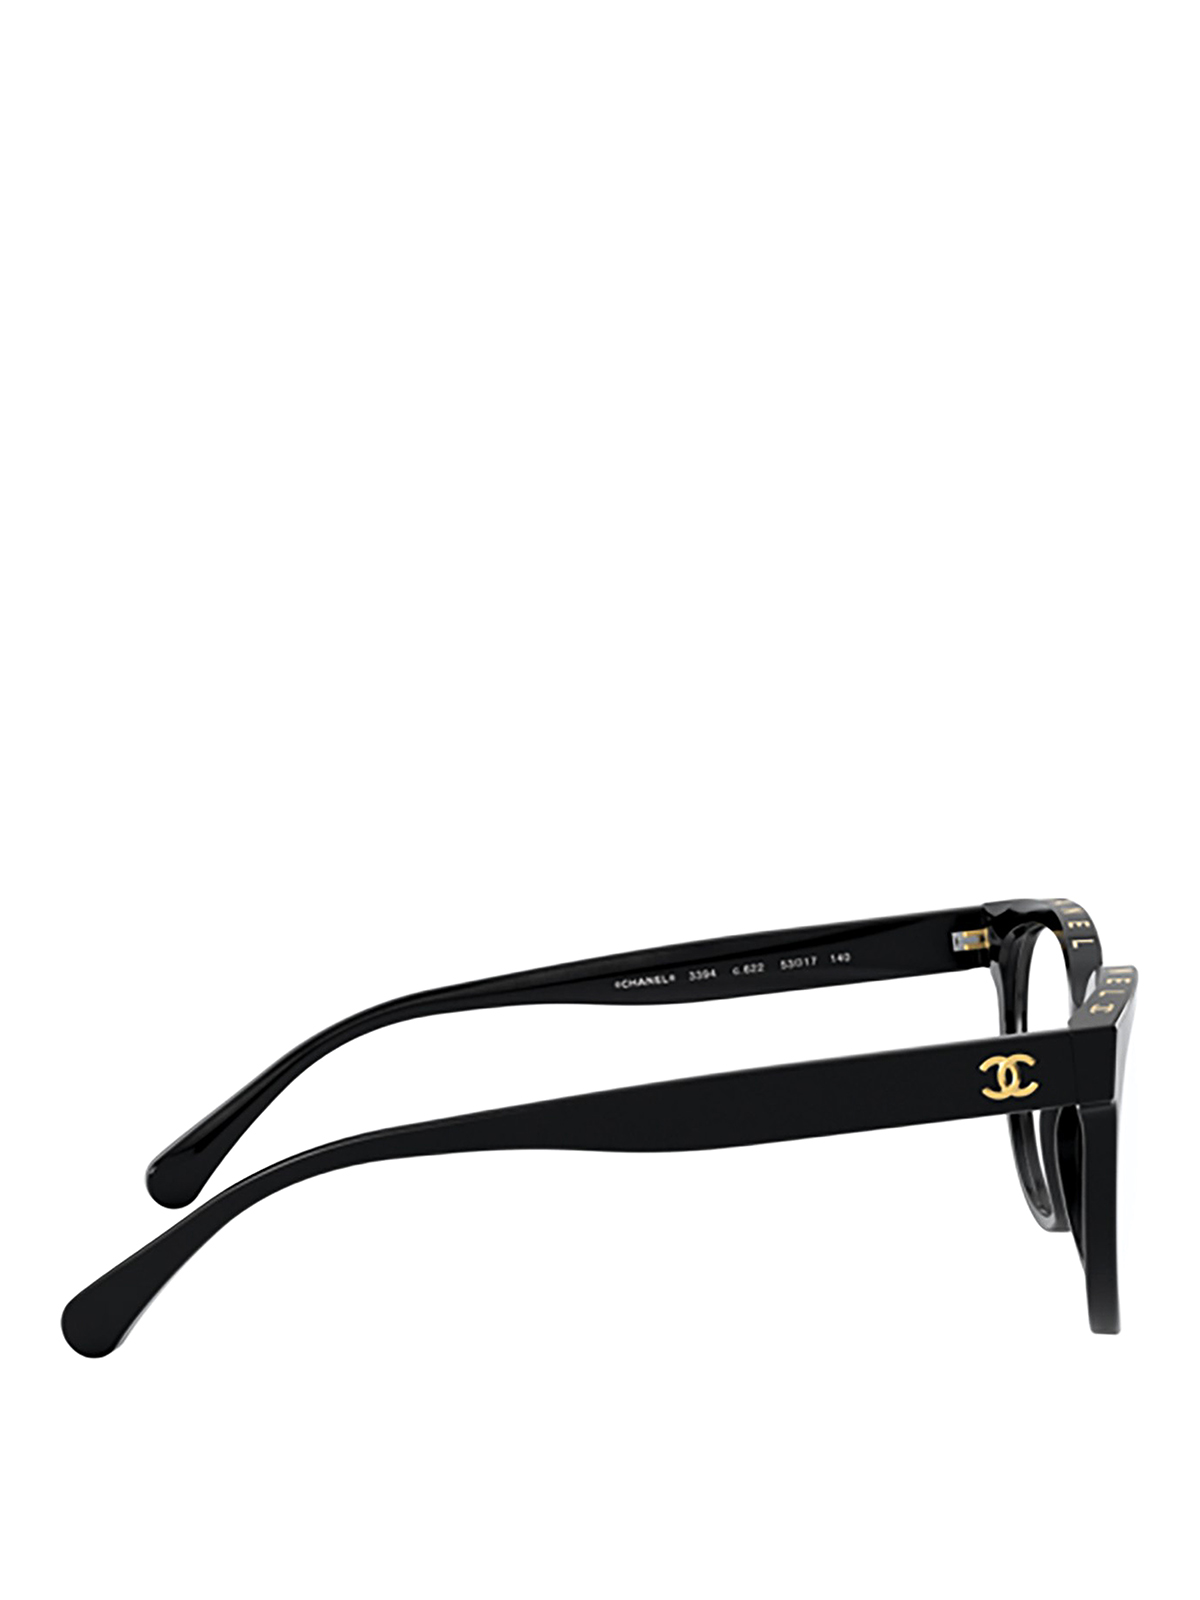 Gold logo frame black round eyeglasses